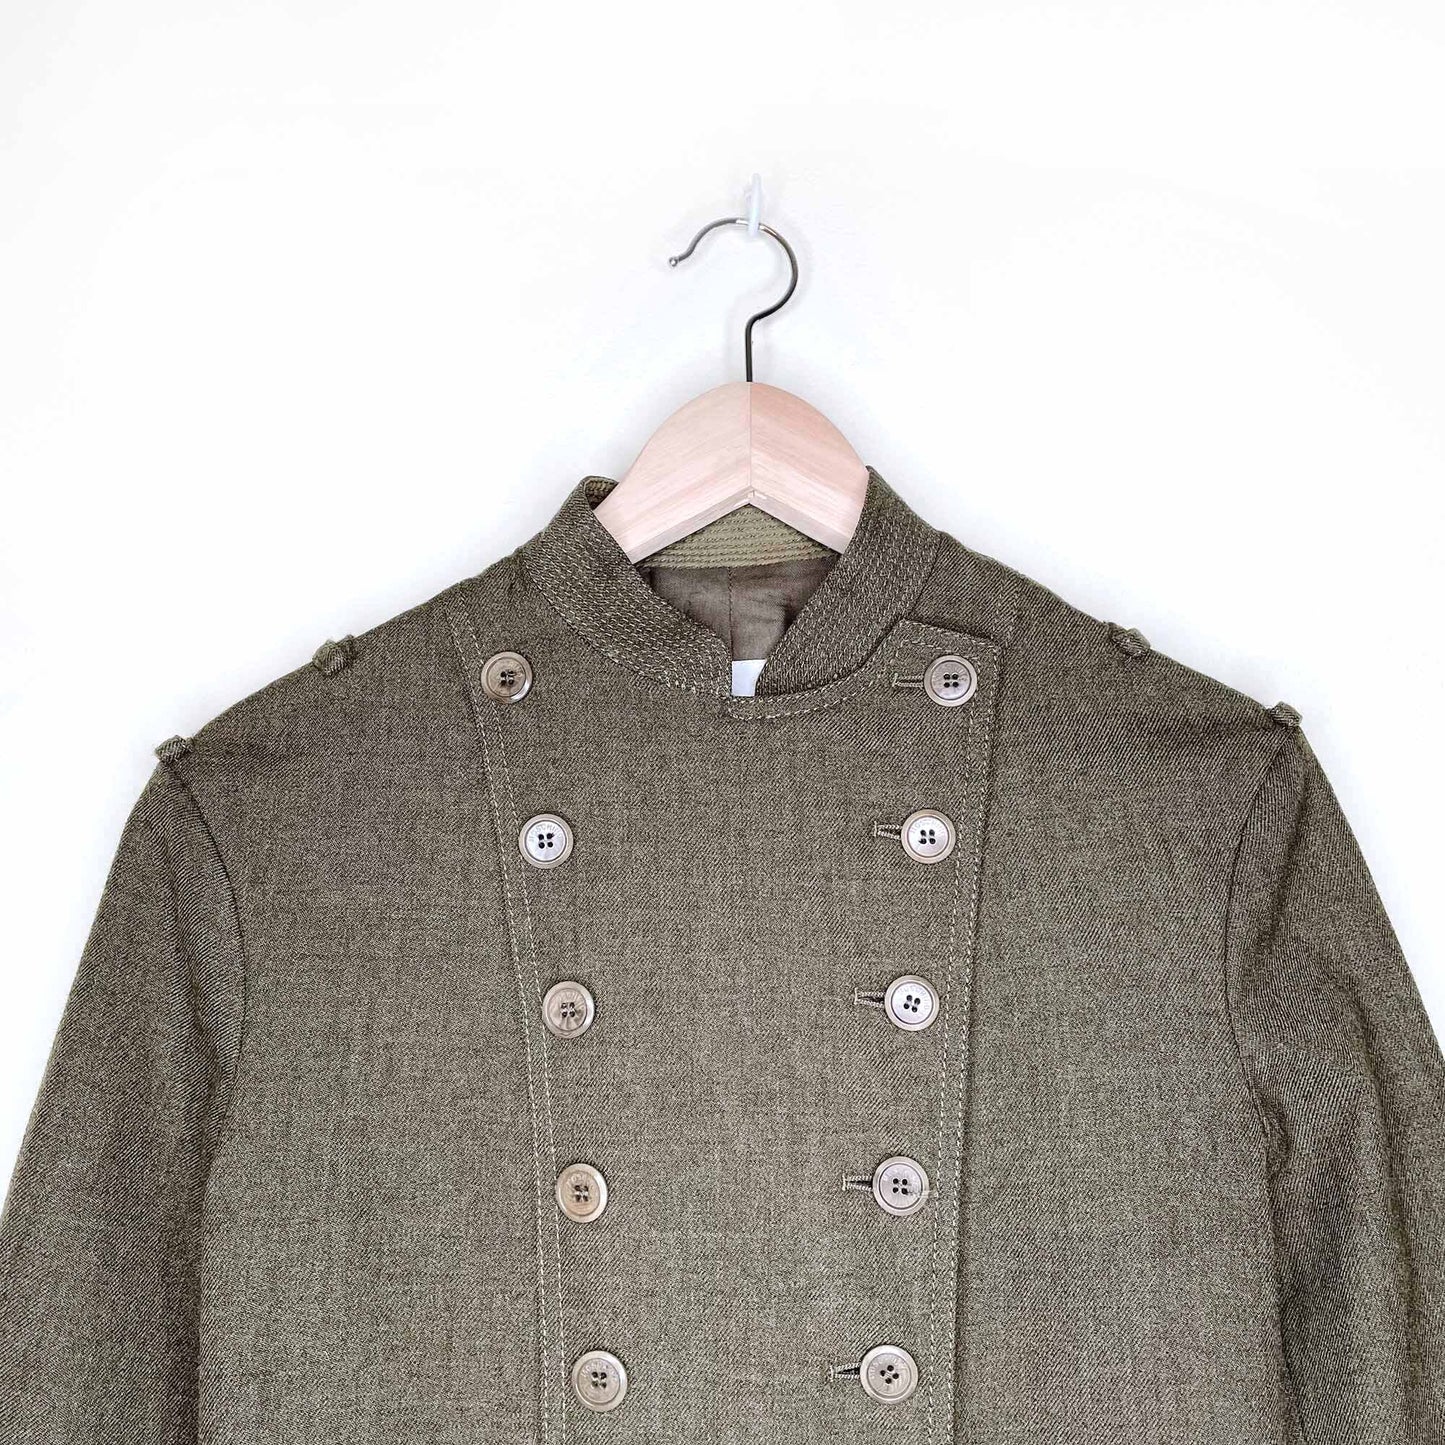 moschino wool military style utility jacket - size 8